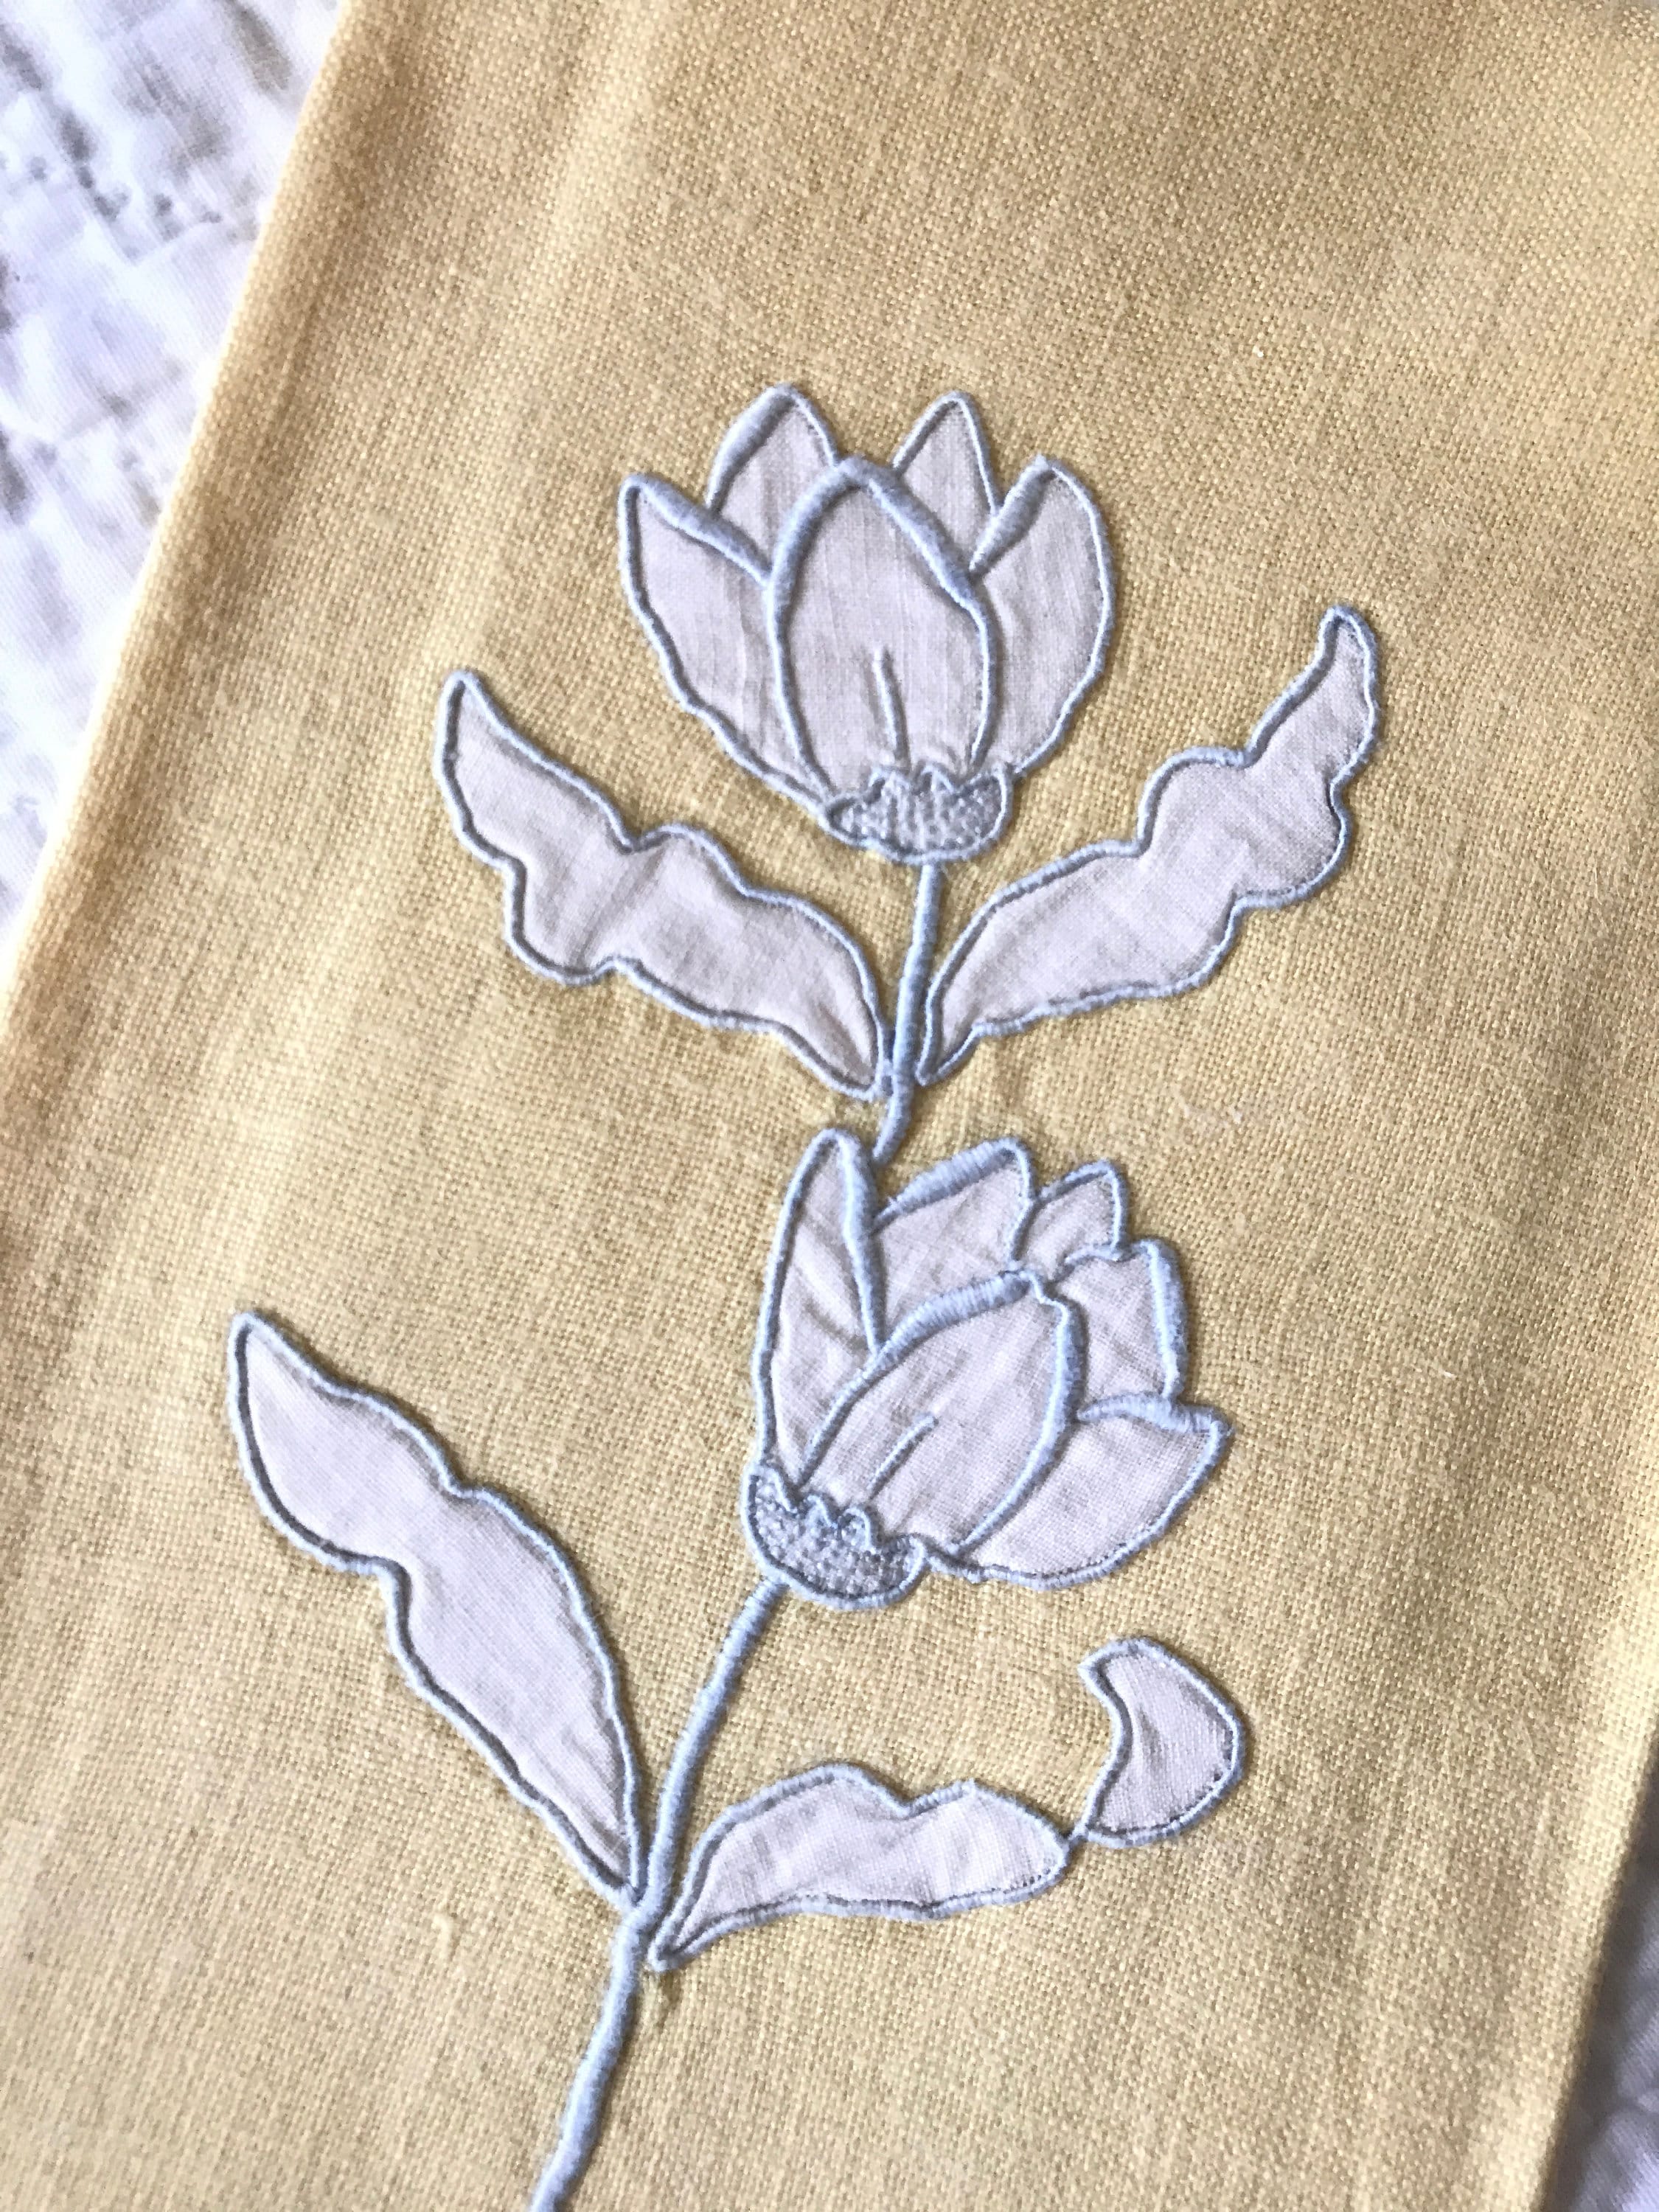 Appliqued White Linen Towel Vintage Organdy Hand Towel Appliques Floral Applique Vintage Guest Towel